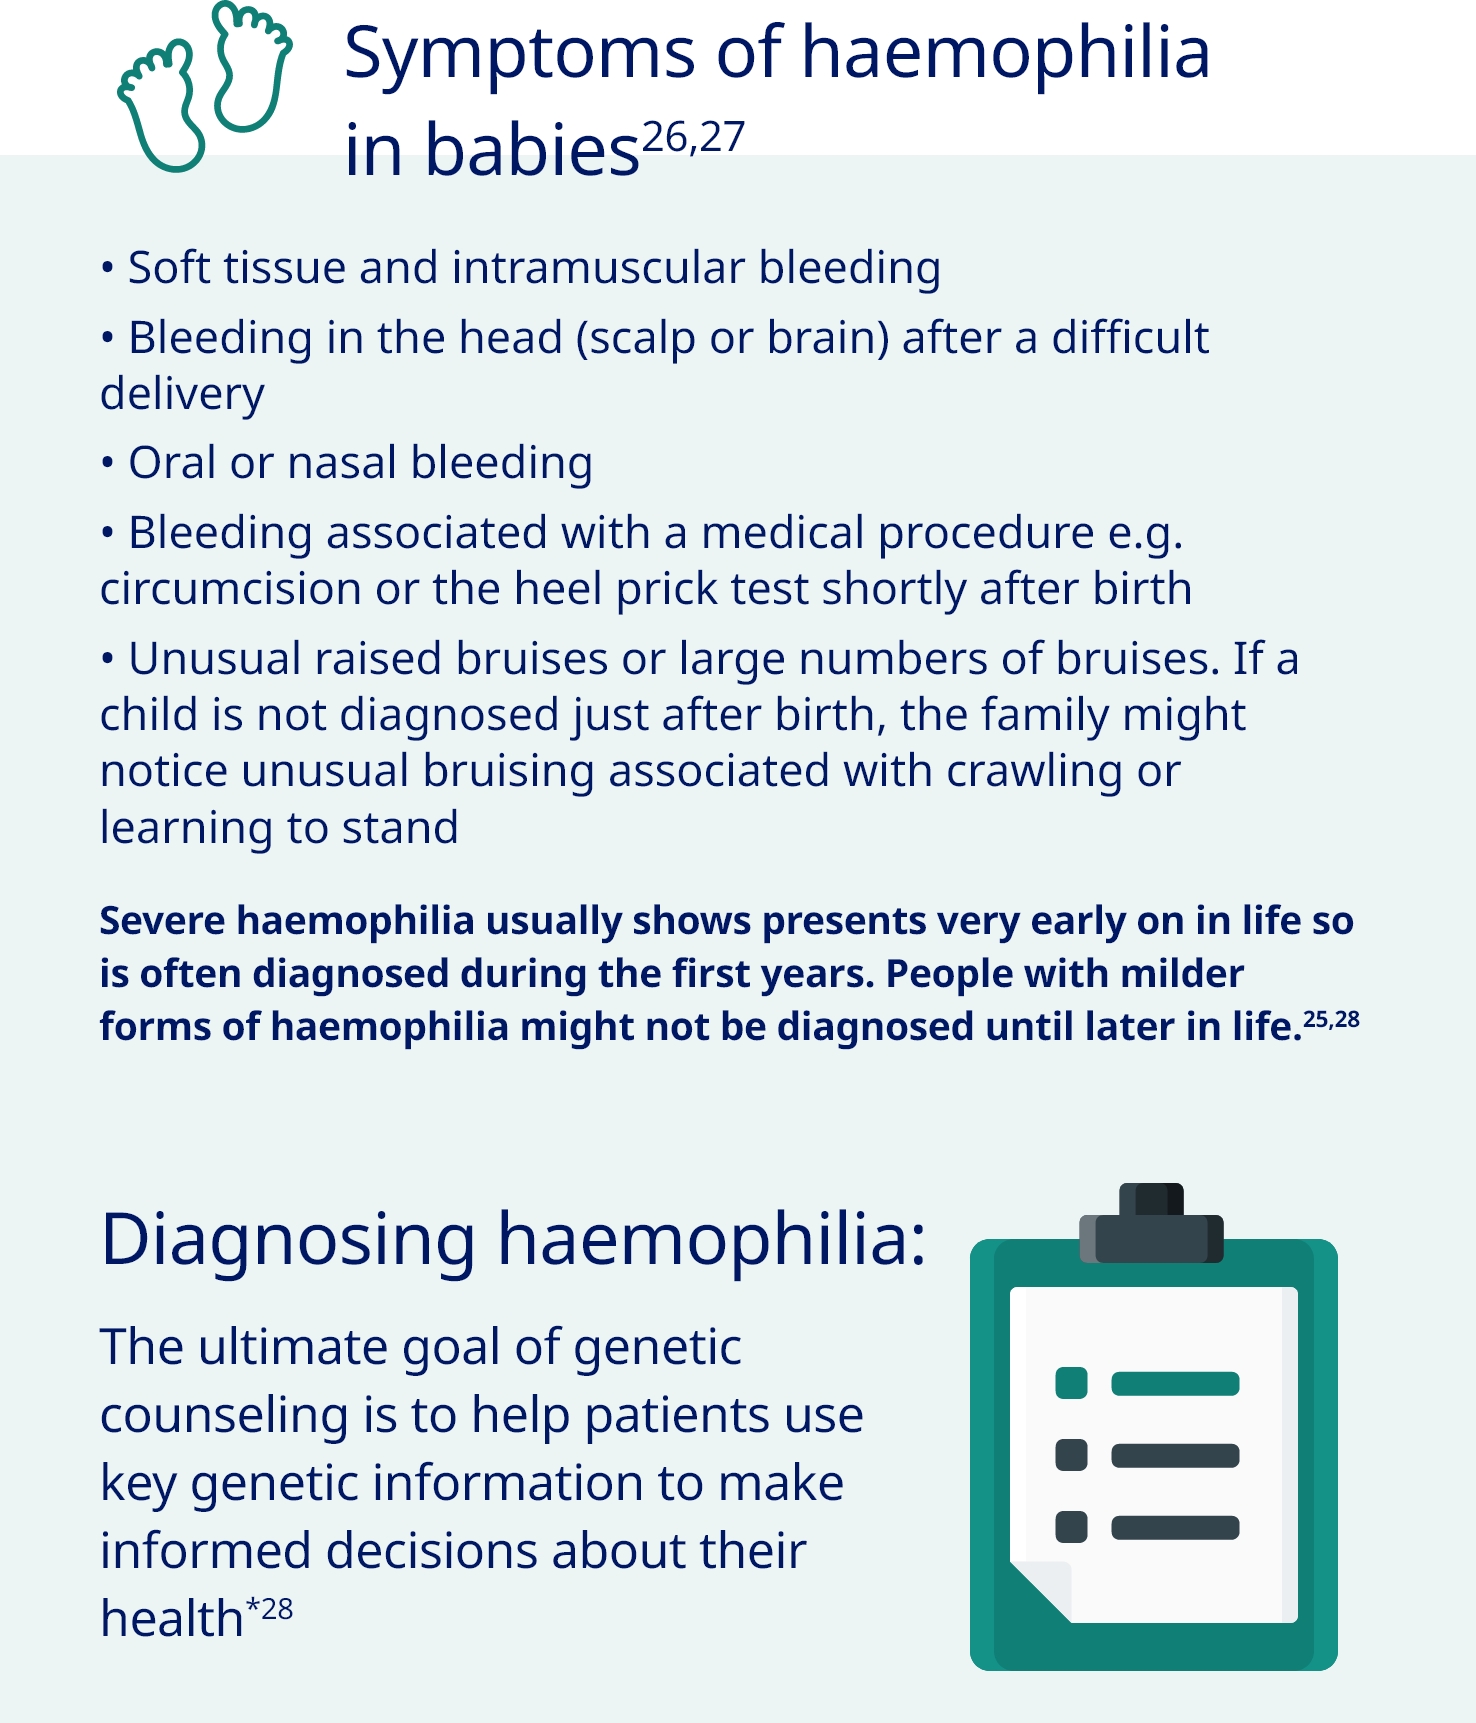 Symptoms of haemophilia in babies